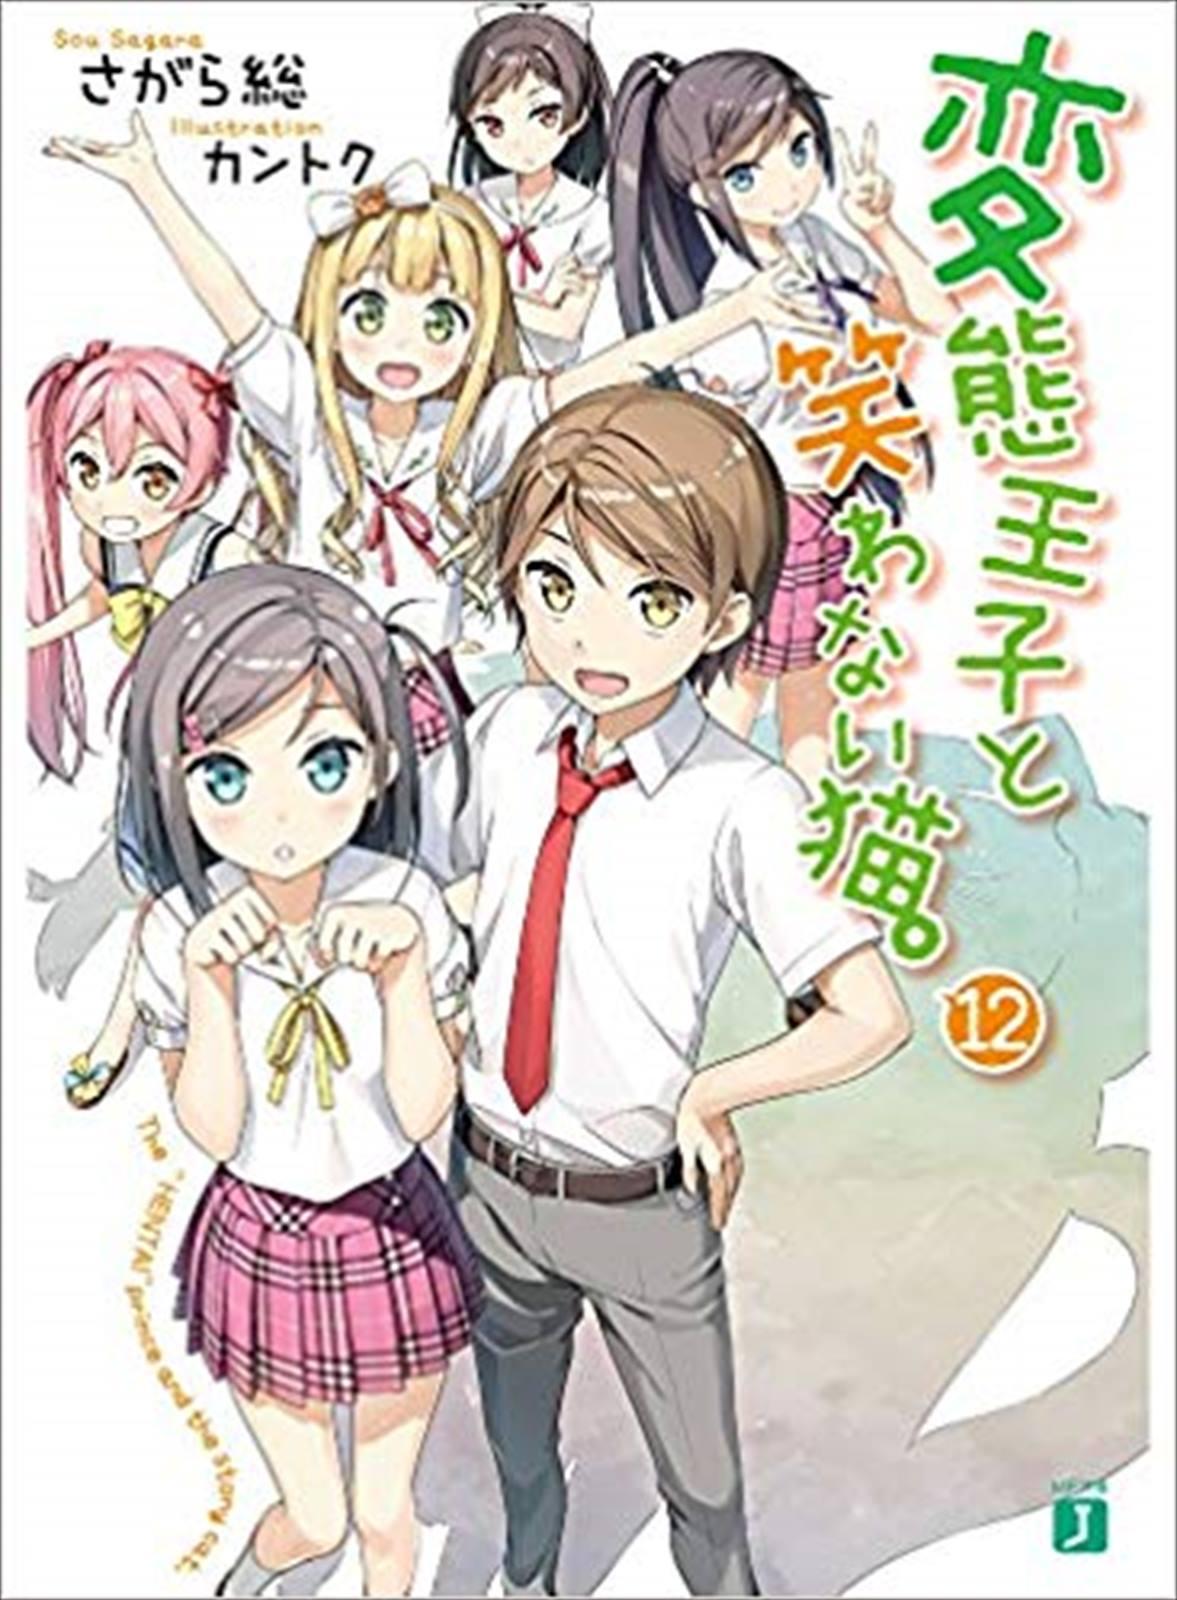 HENTAI OUJI TO WARAWANAI NEKO Prince and Stony Cat Novel Comp Set 1